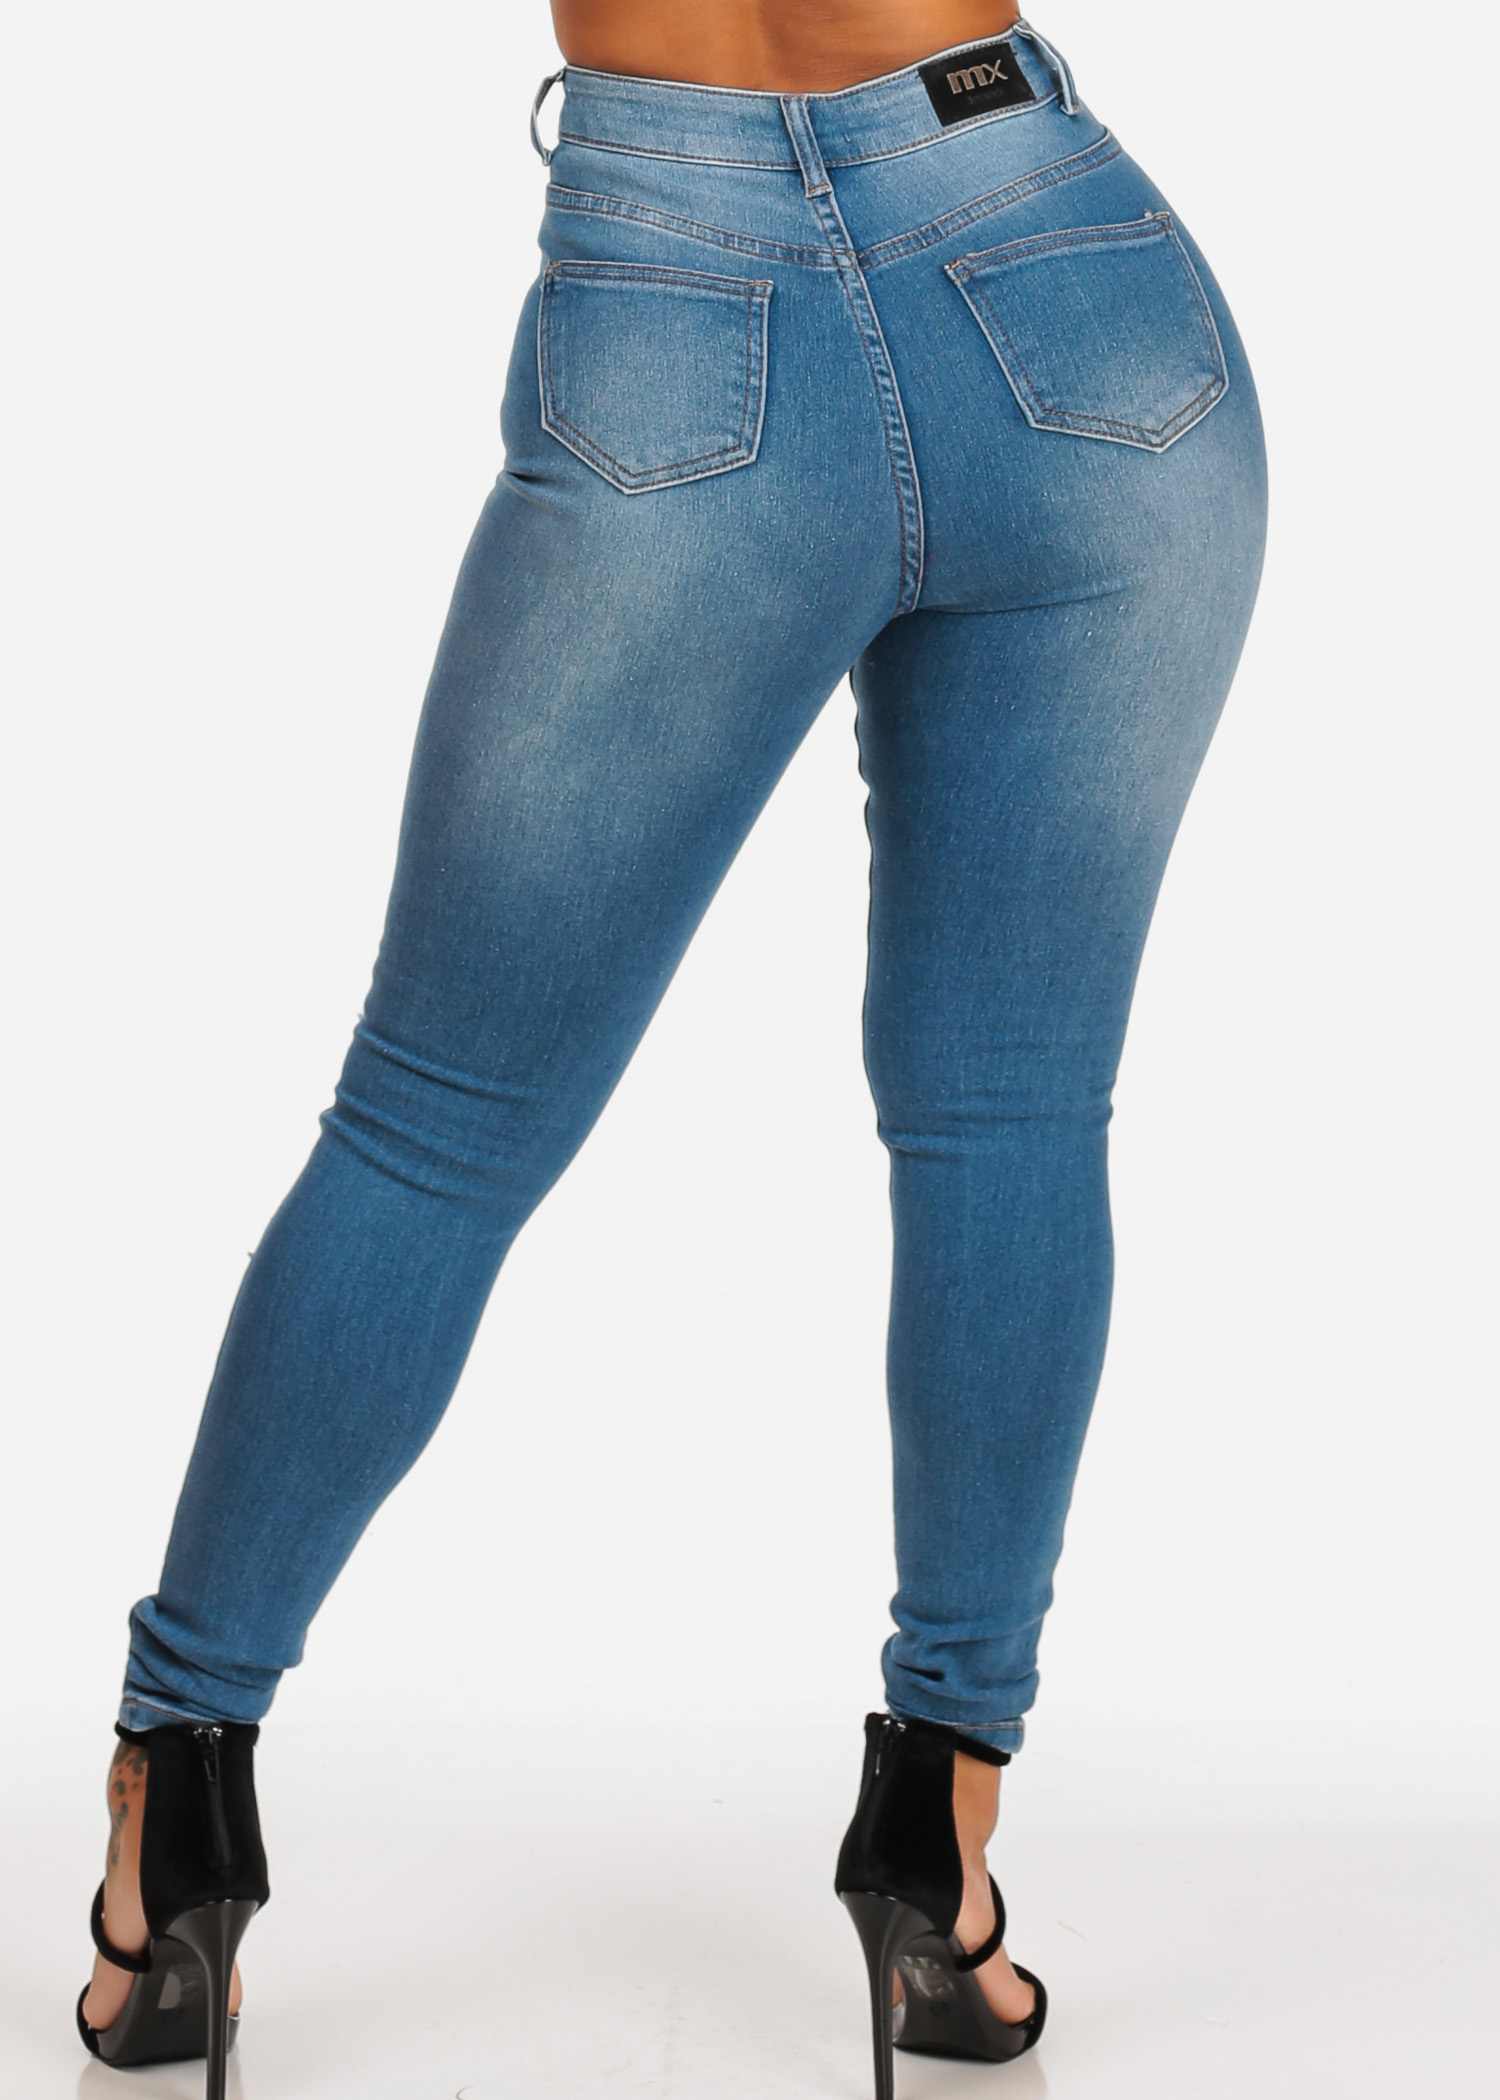 Moda Xpress Women Juniors Blue Ultra High Rise Female Skinny Jeans 10583W - image 3 of 4